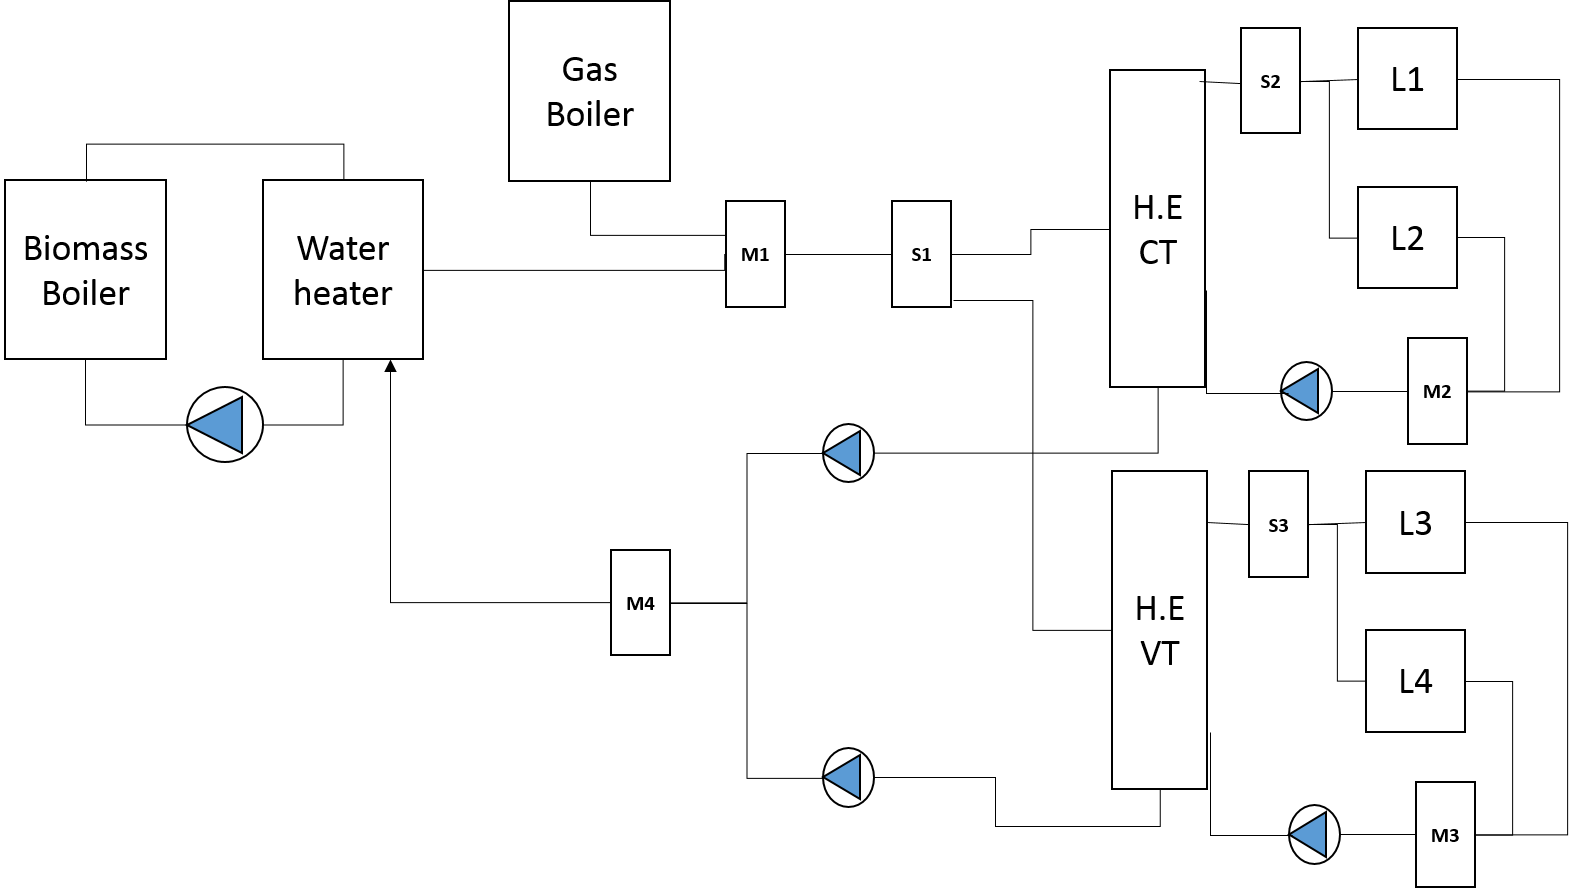 EnegyPlus layout